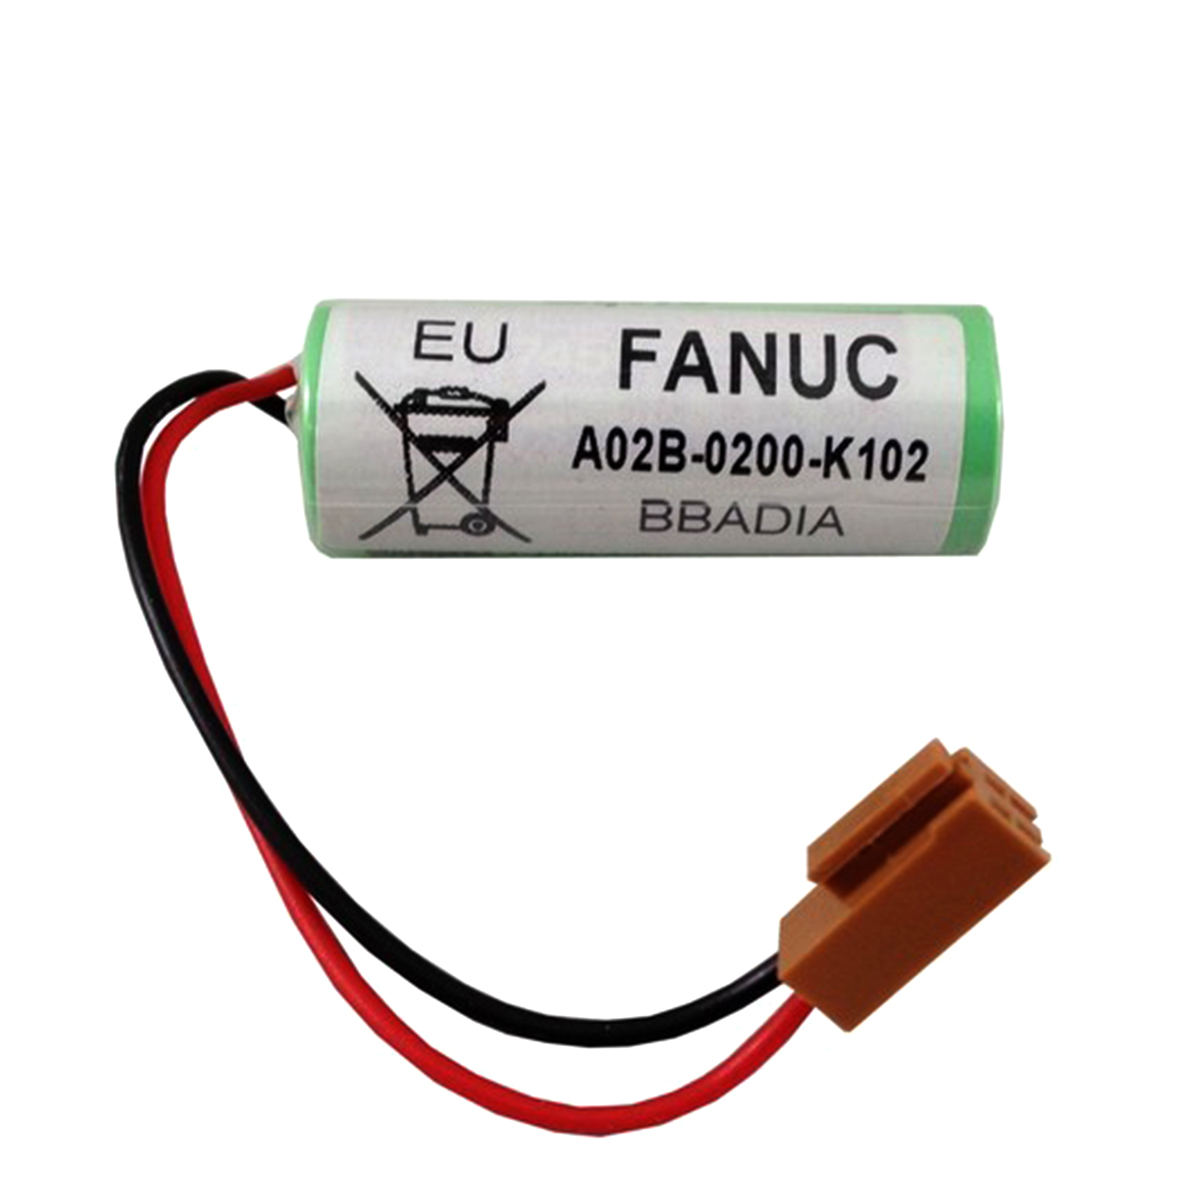 FANUC A02B-0200-K102 3V